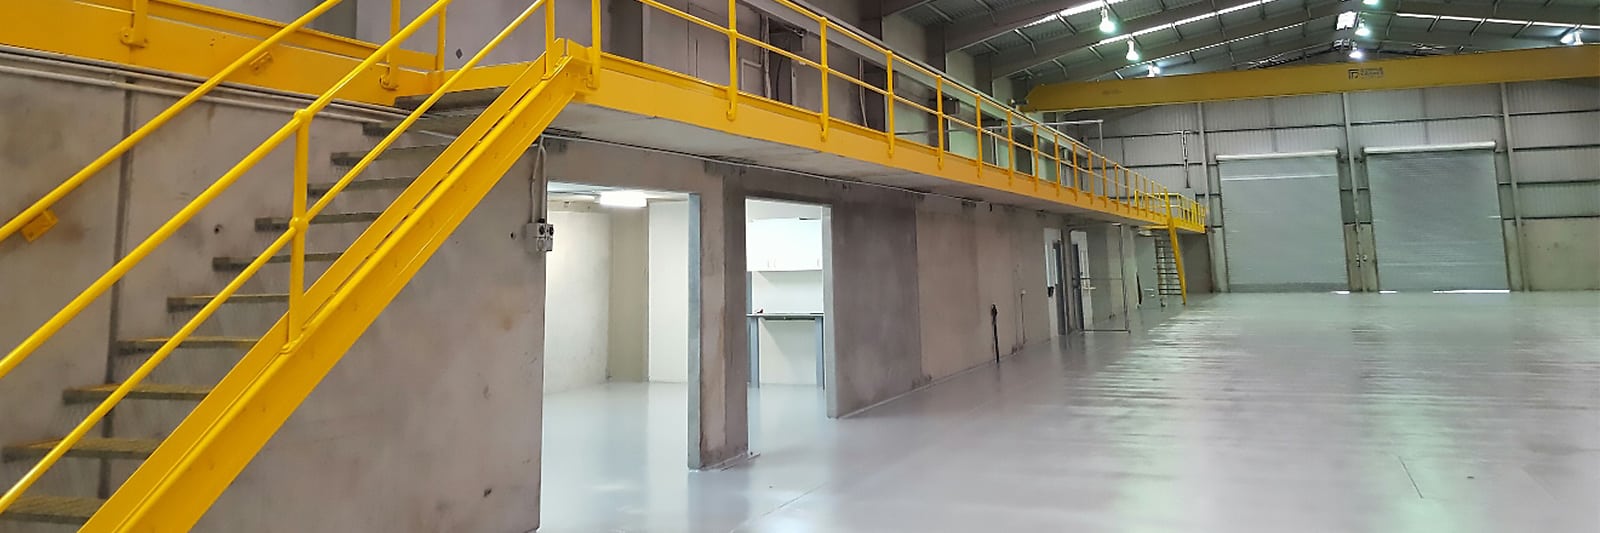 Warehouse With Yellow Railings